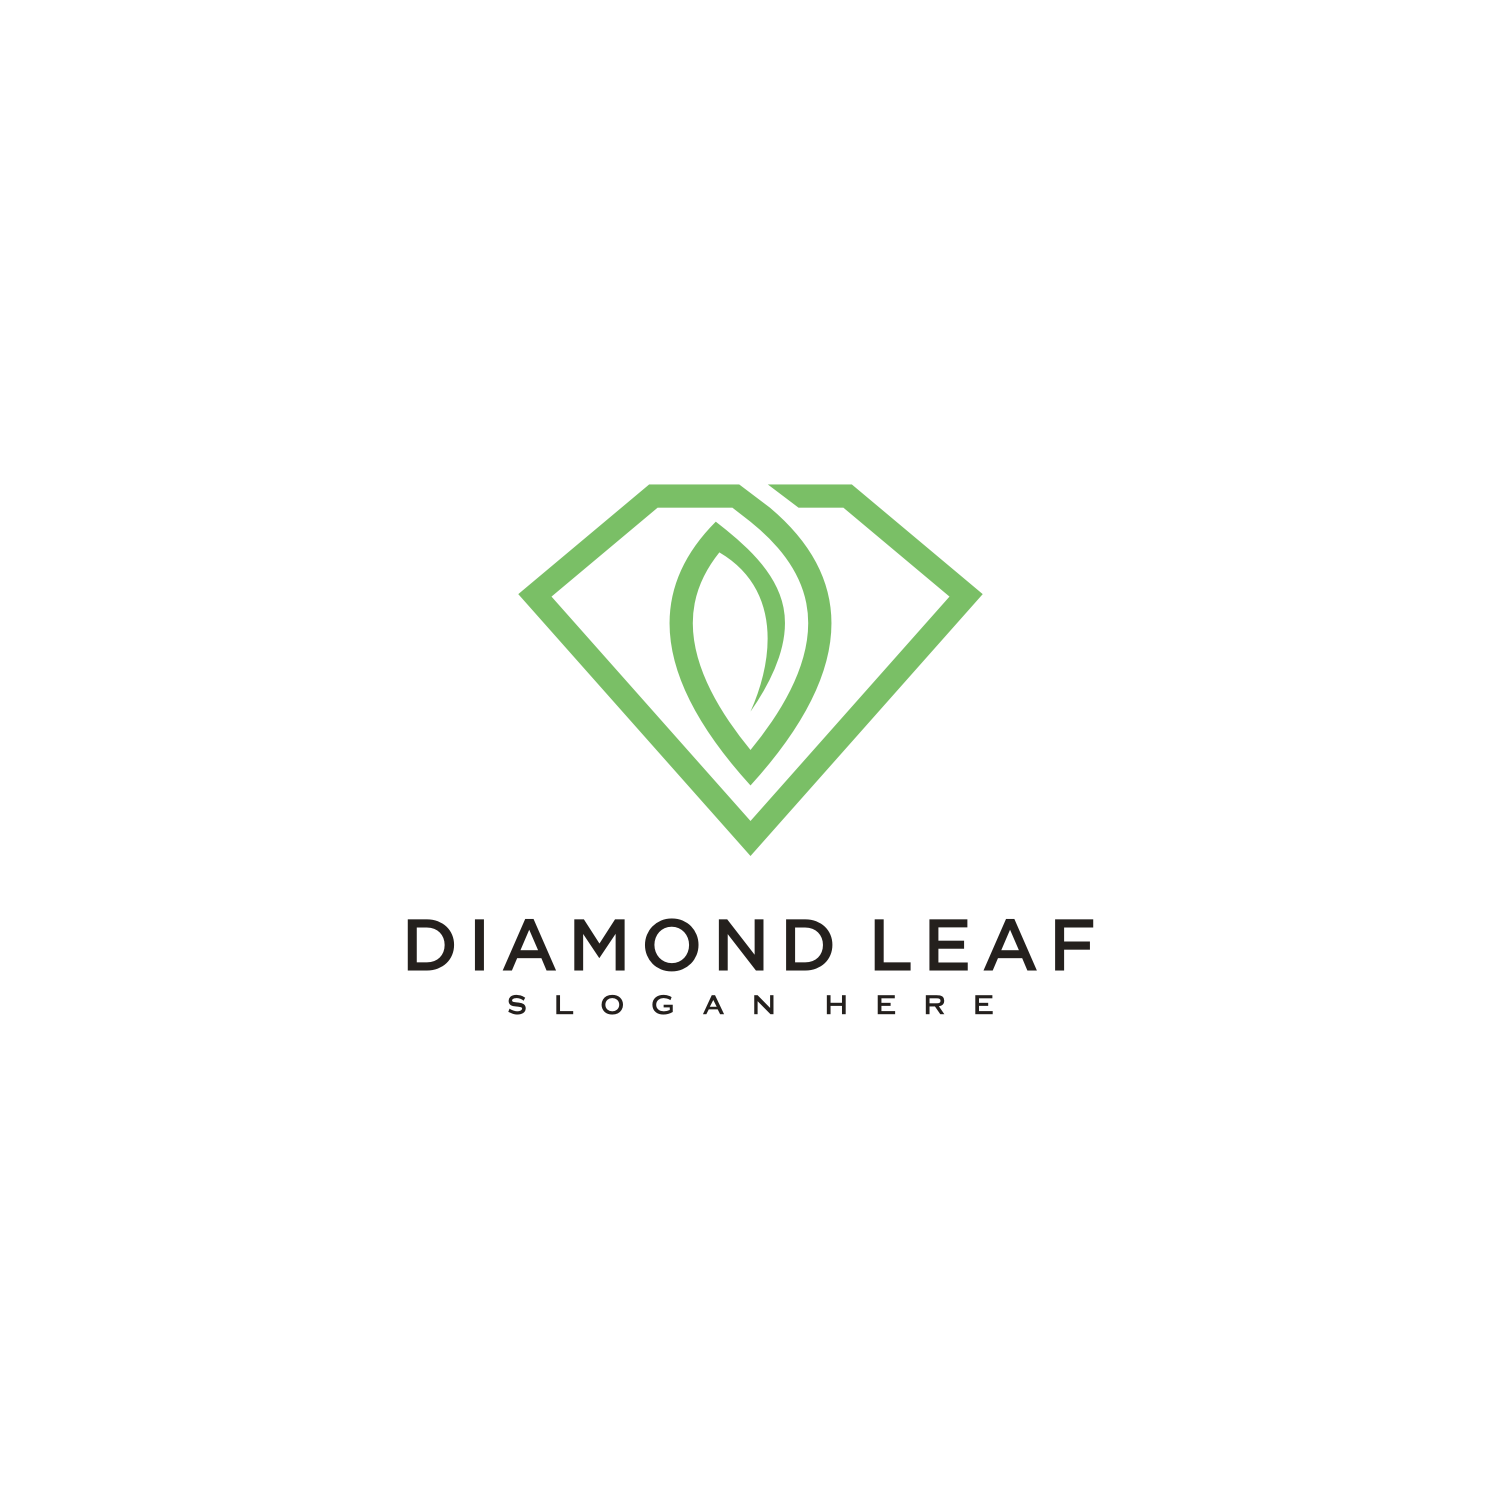 Diamond Leaf Logo Vector Design Line Style cover image.